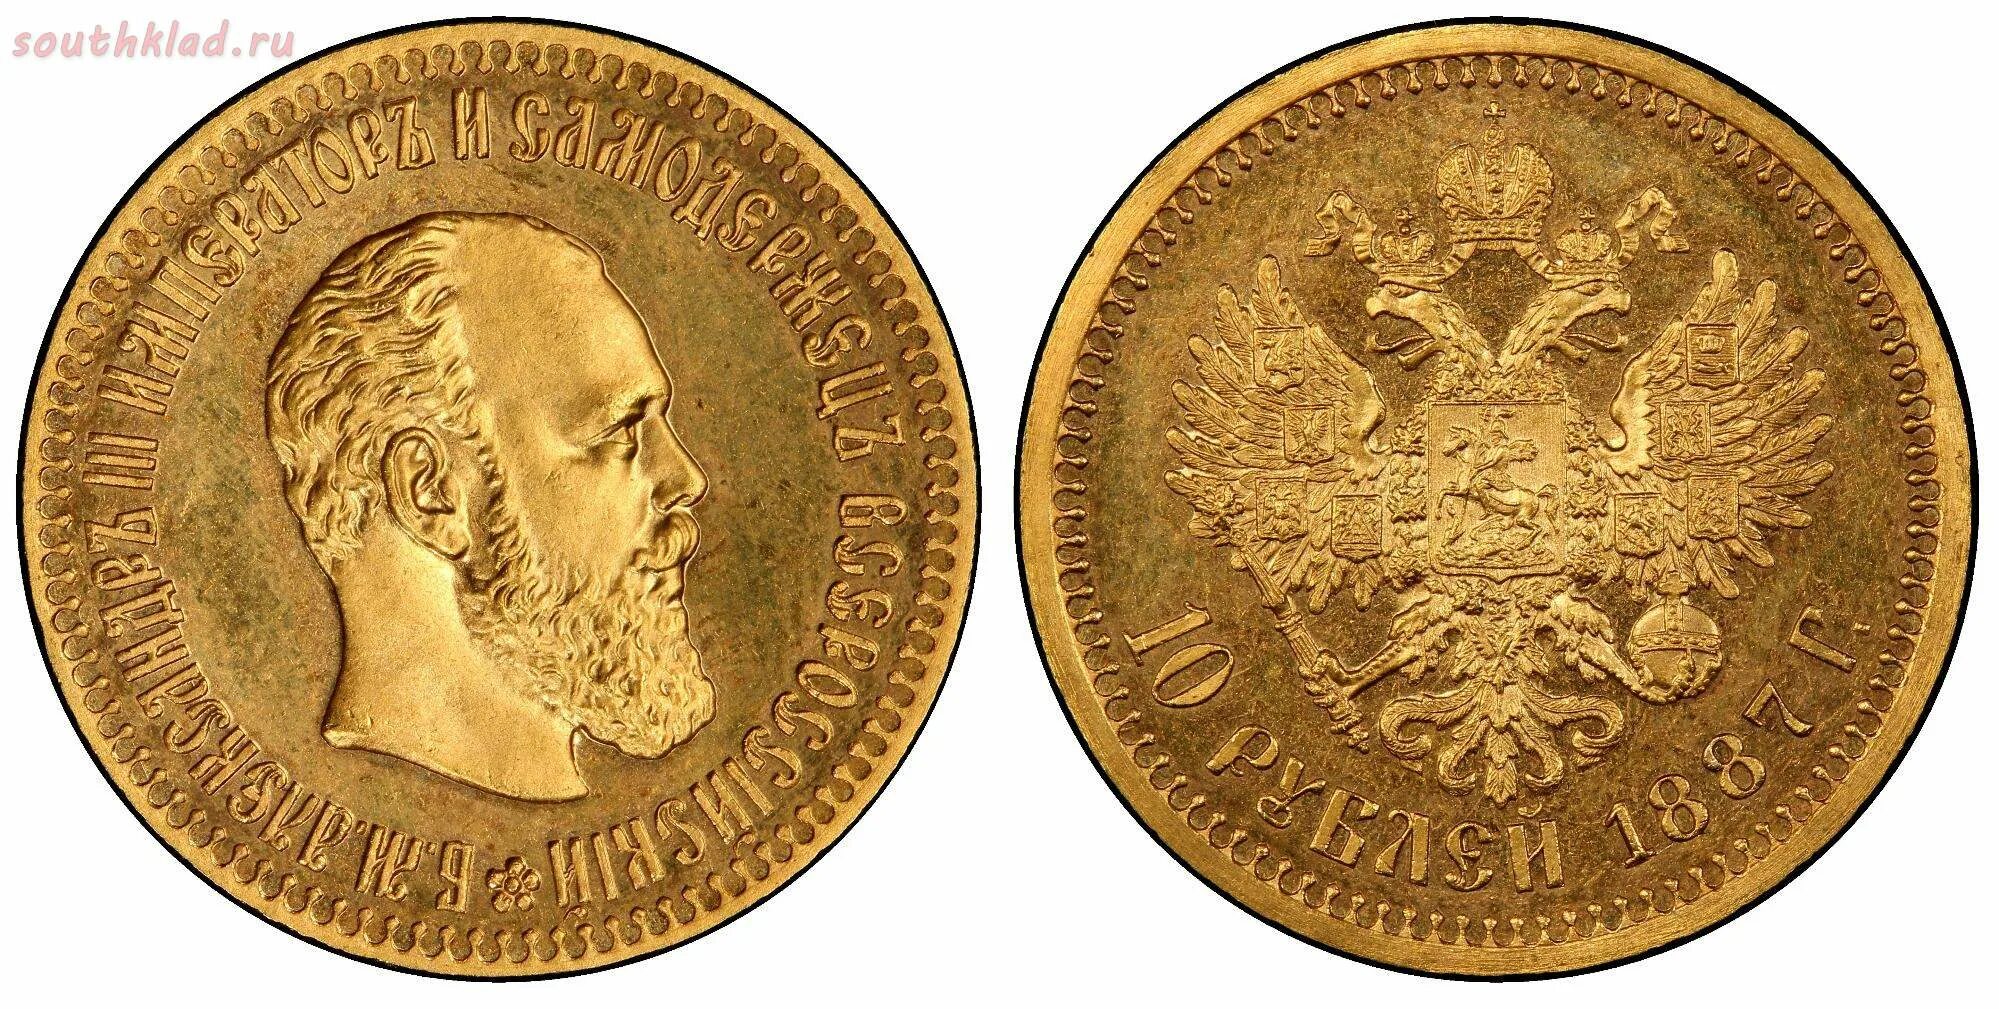 Александре III (1845 - 1894). Золотая монета 15 рублей